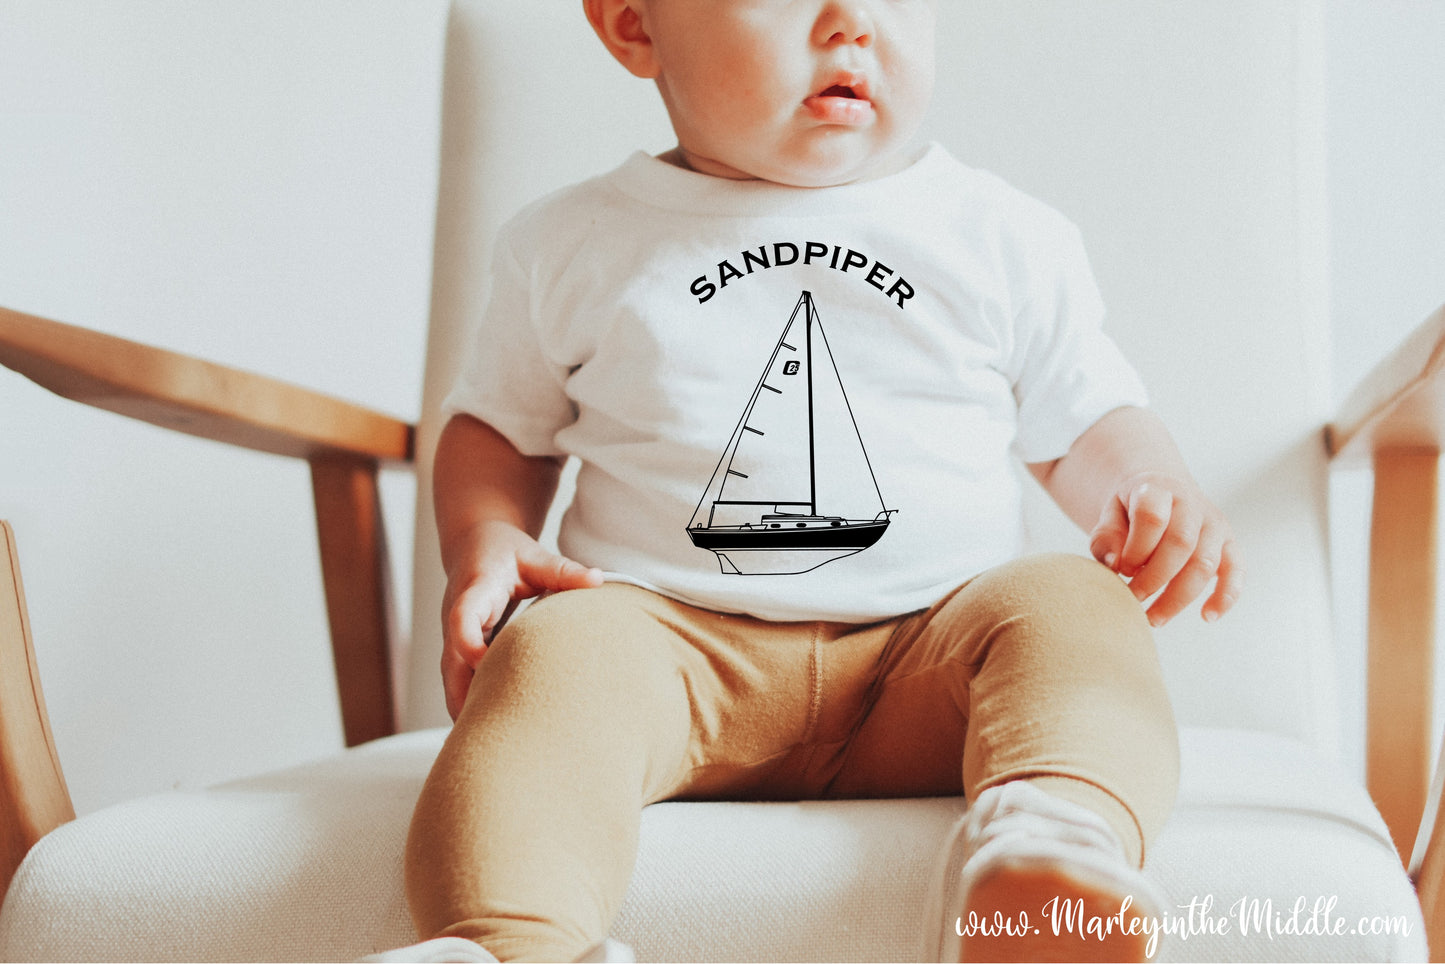 Baby Custom Boat Tee Shirt, Infant Sailboat Tee, Kids Boat Shirt, Youth Boat Shirt